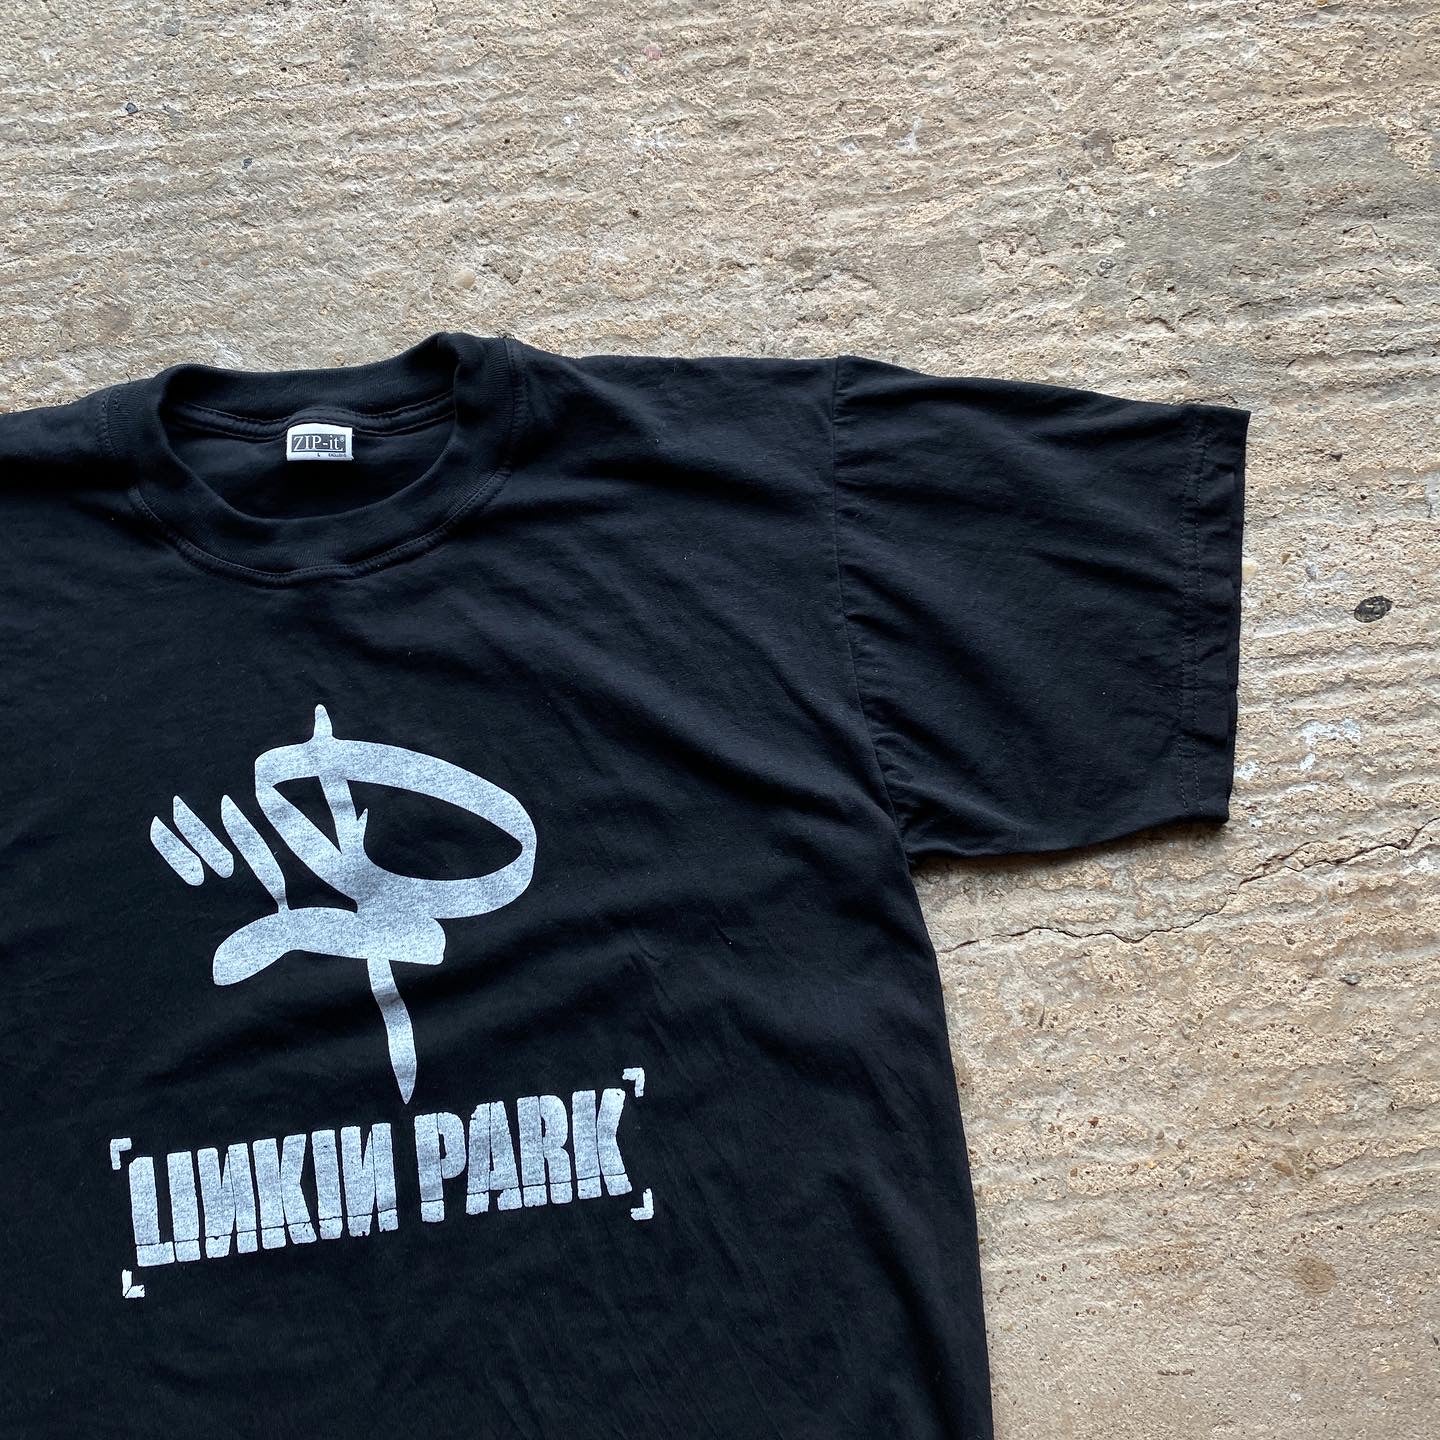 Linkin Park - 'Hybrid Theory' - 2000 - M/L